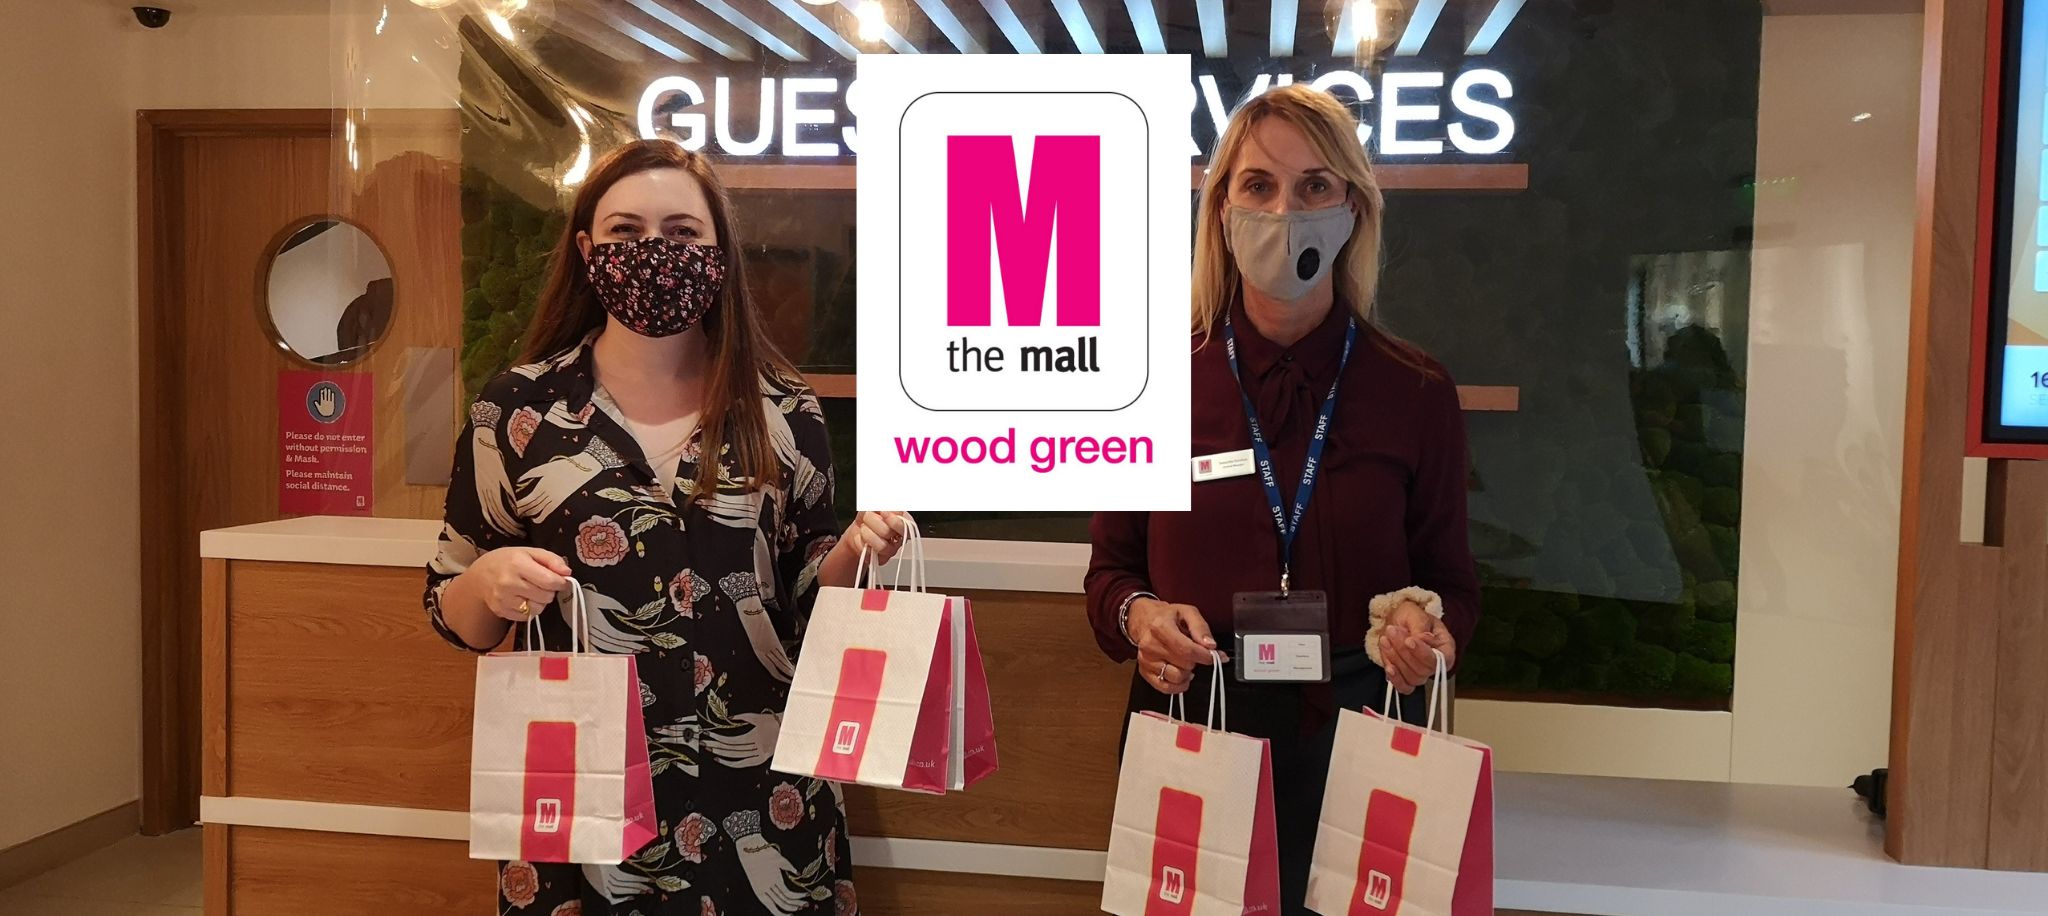 the-mall-wood-green-header-revo